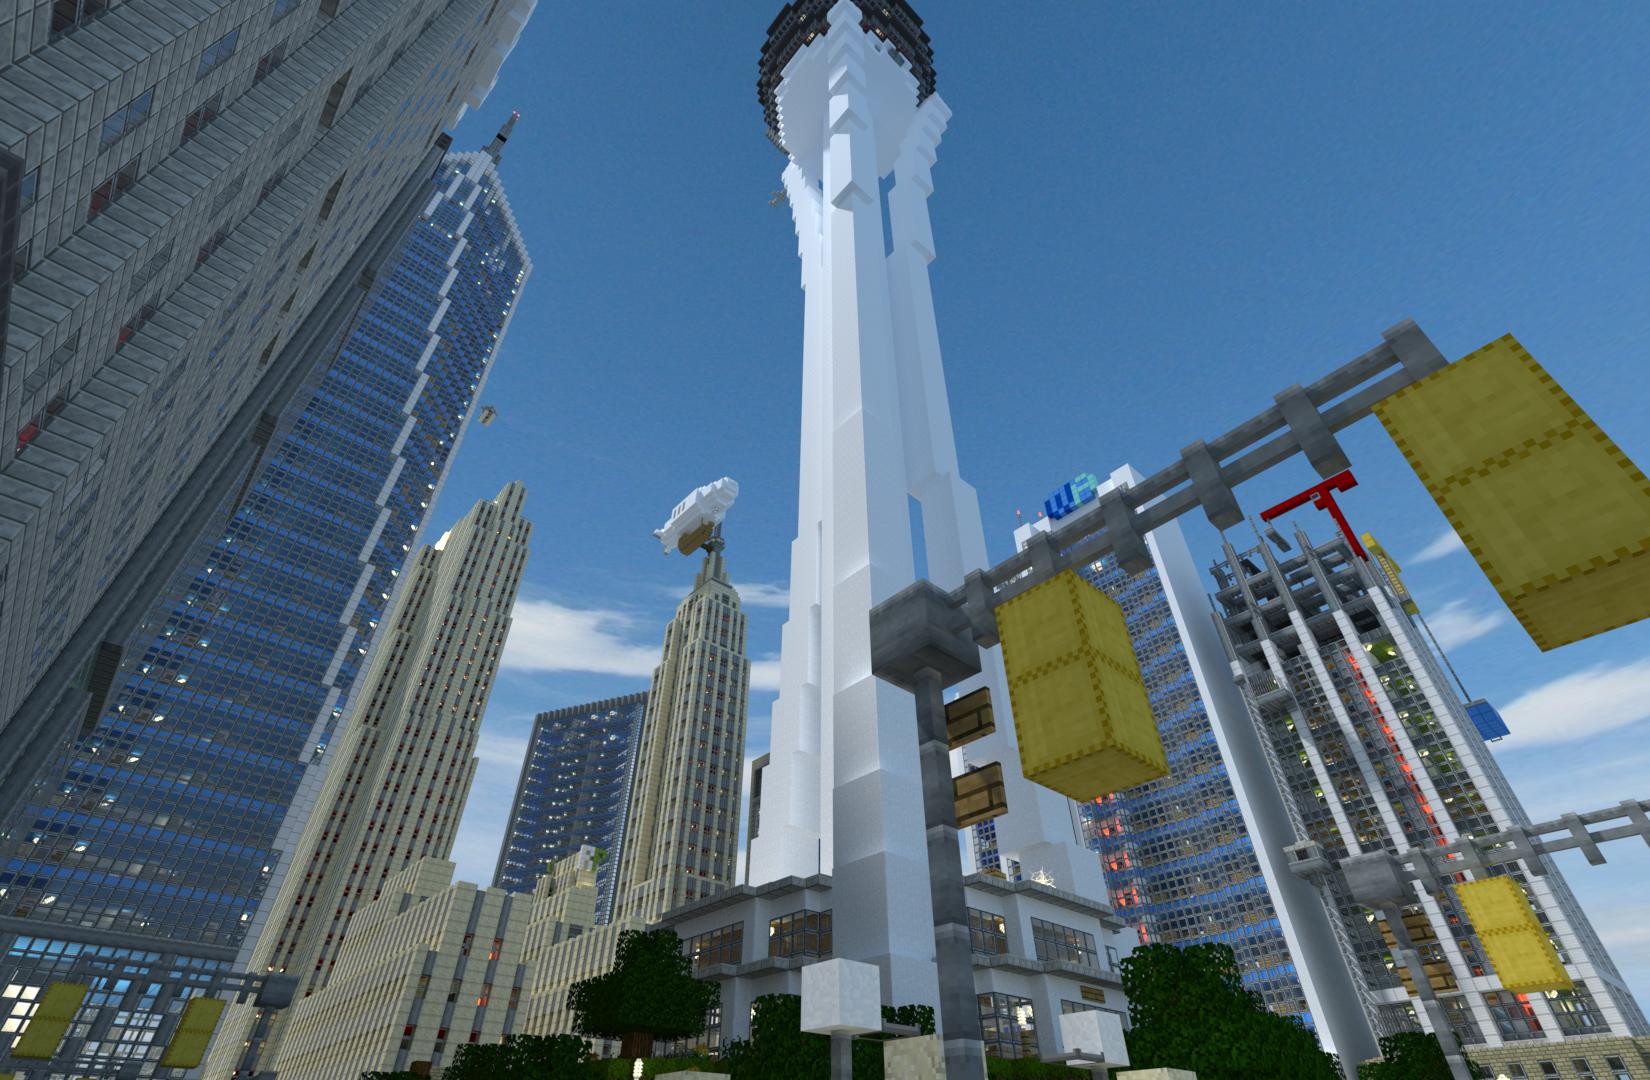 Amazing Minecraft City